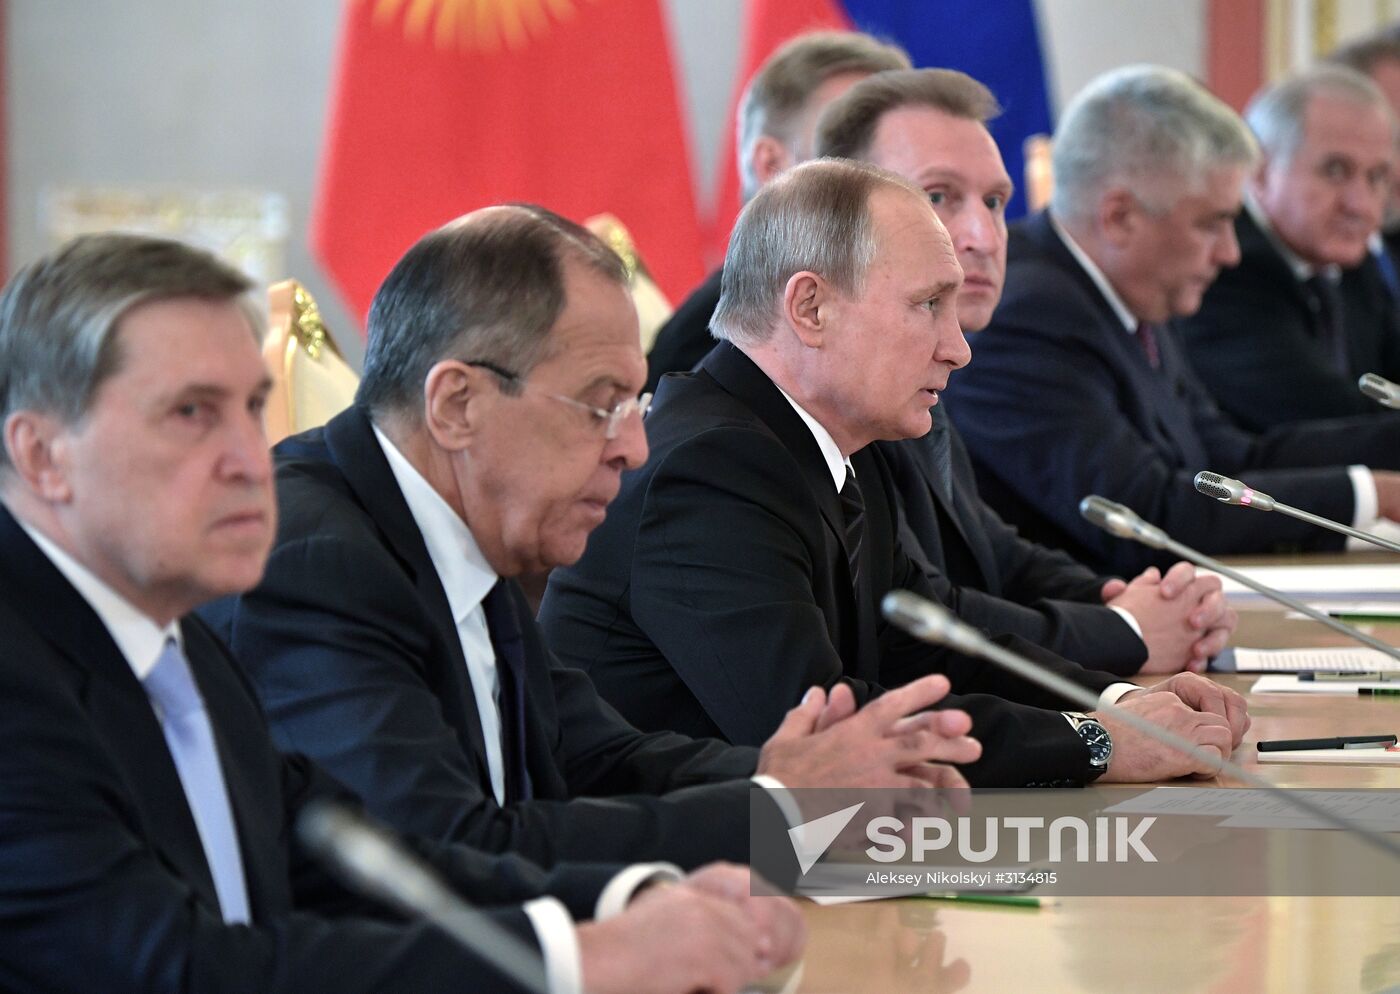 Vladimir Putin holds talks with President of Kyrgyzstan Almazbek Atambayev